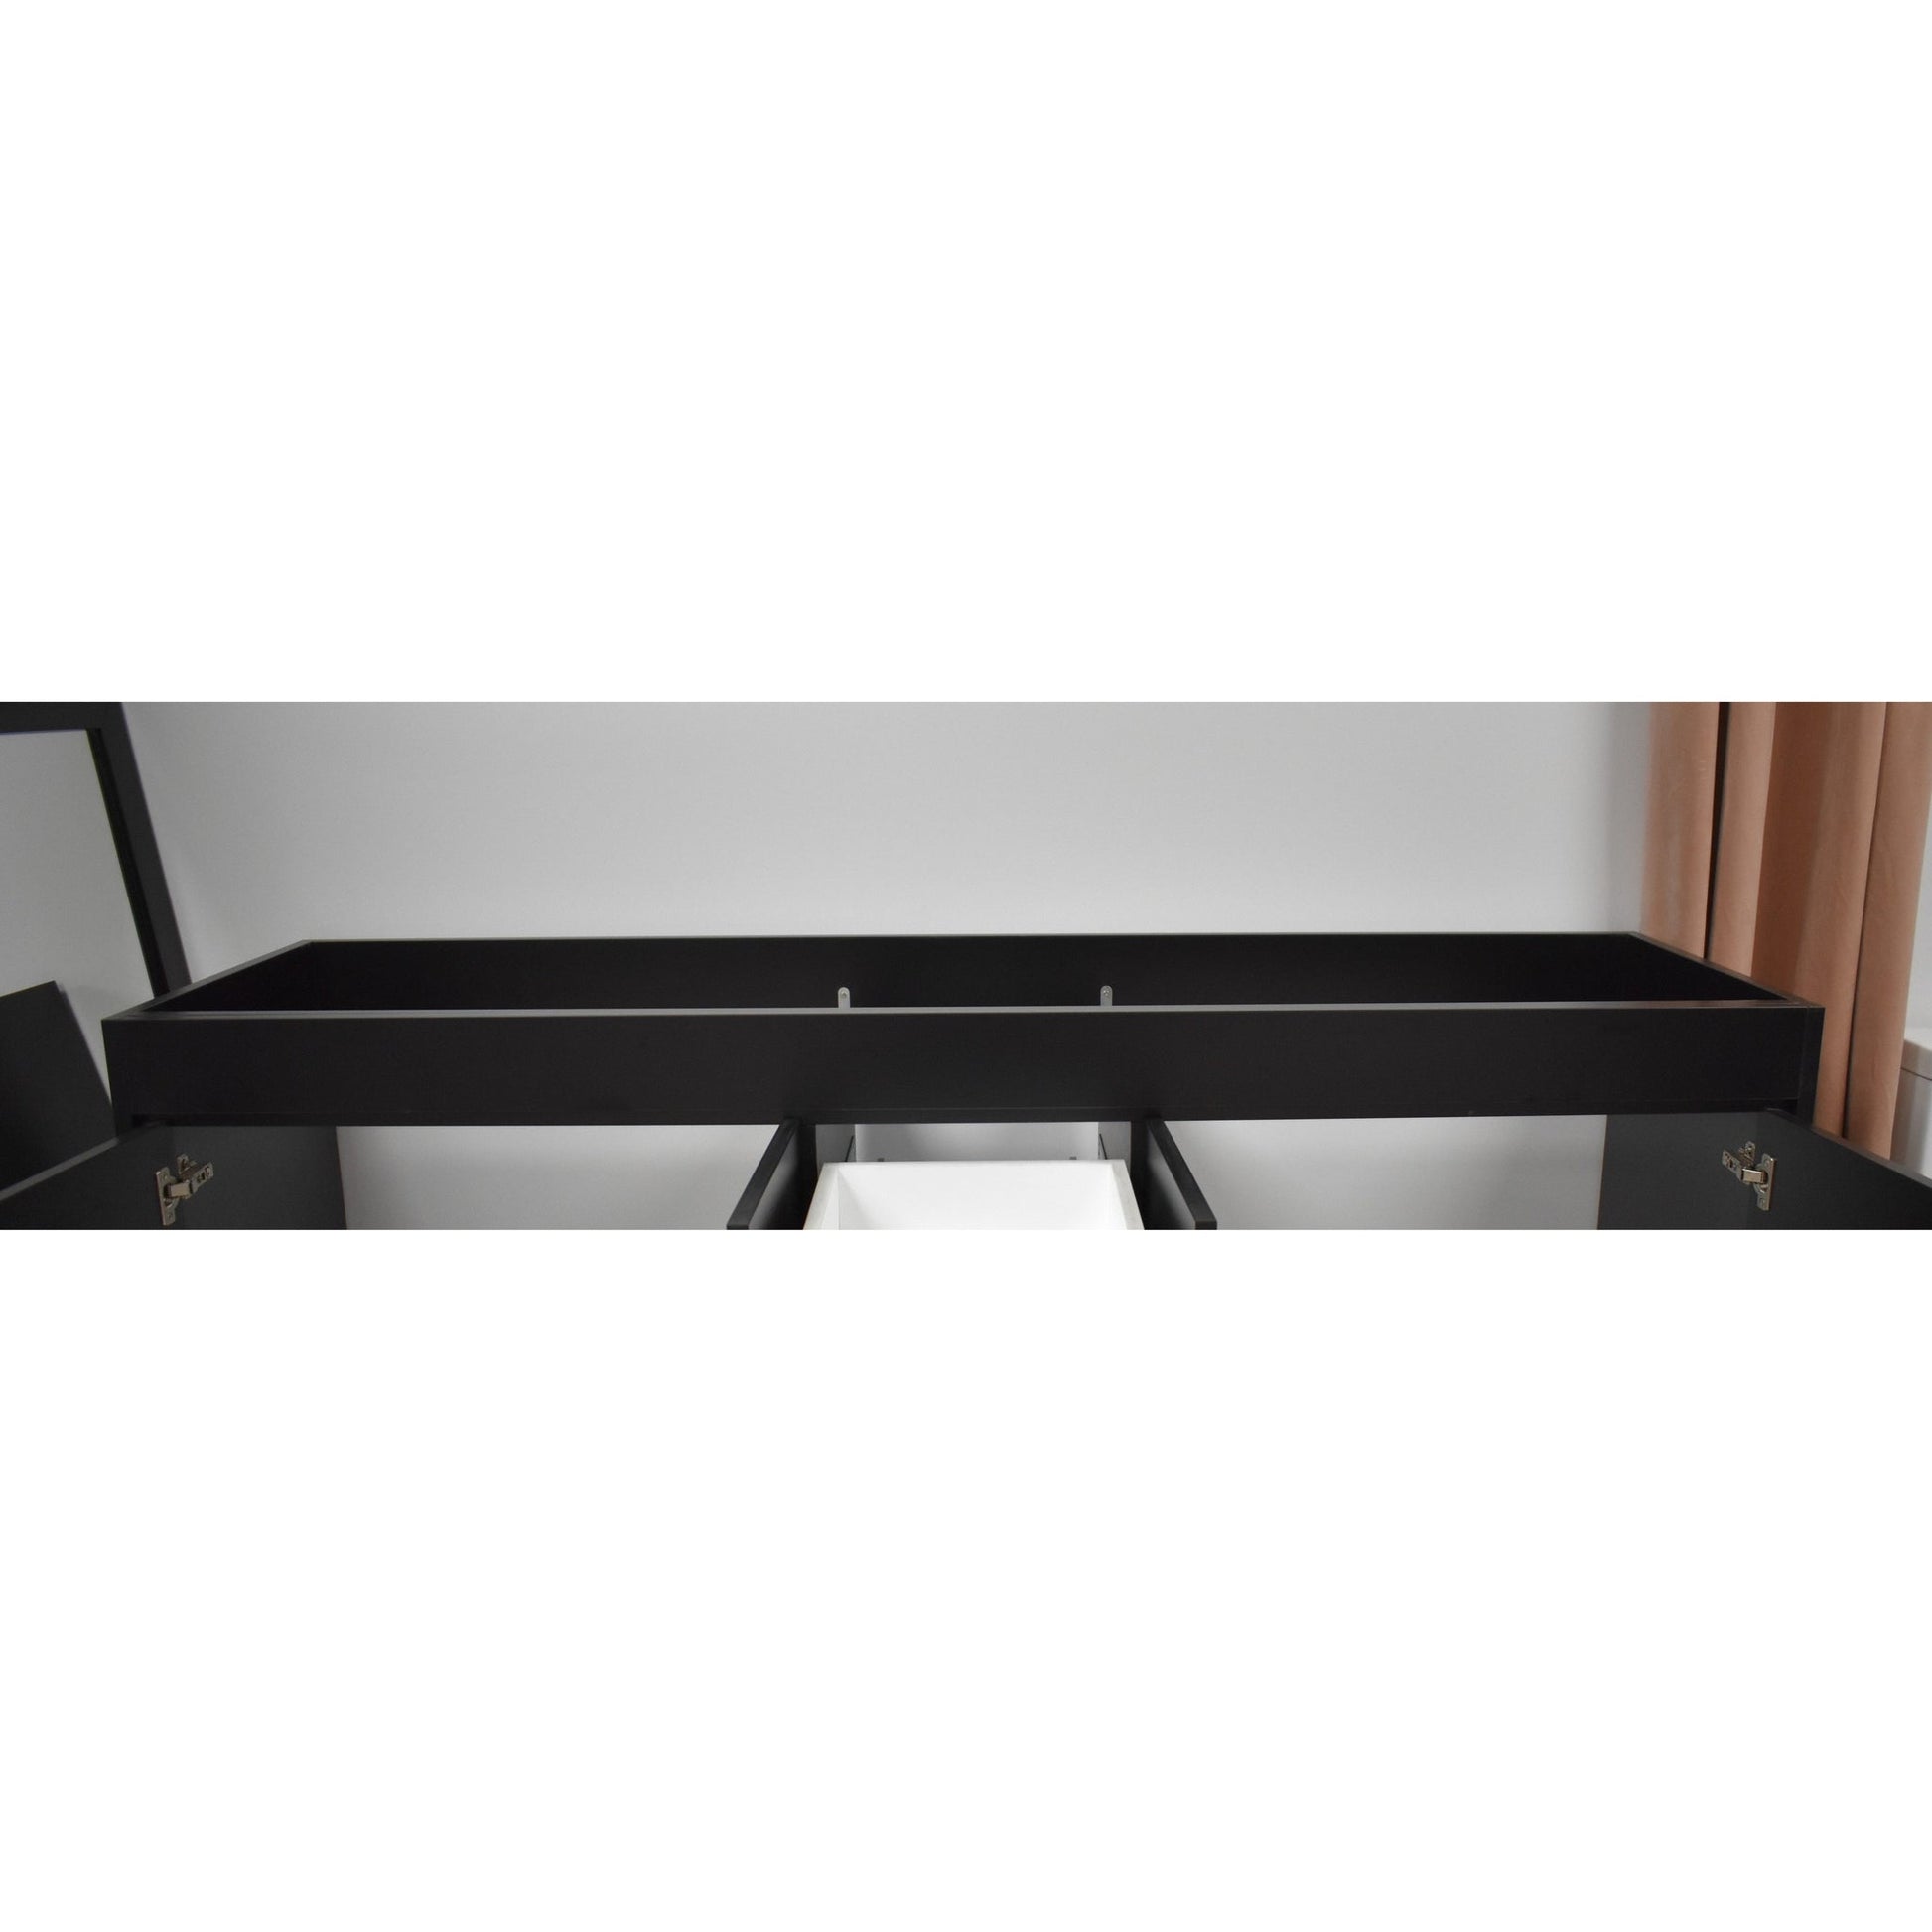 Volpa USA Capri 60" x 22" Black Modern Bathroom Vanity For Double Sinks With Brushed Nickel Edge Handles